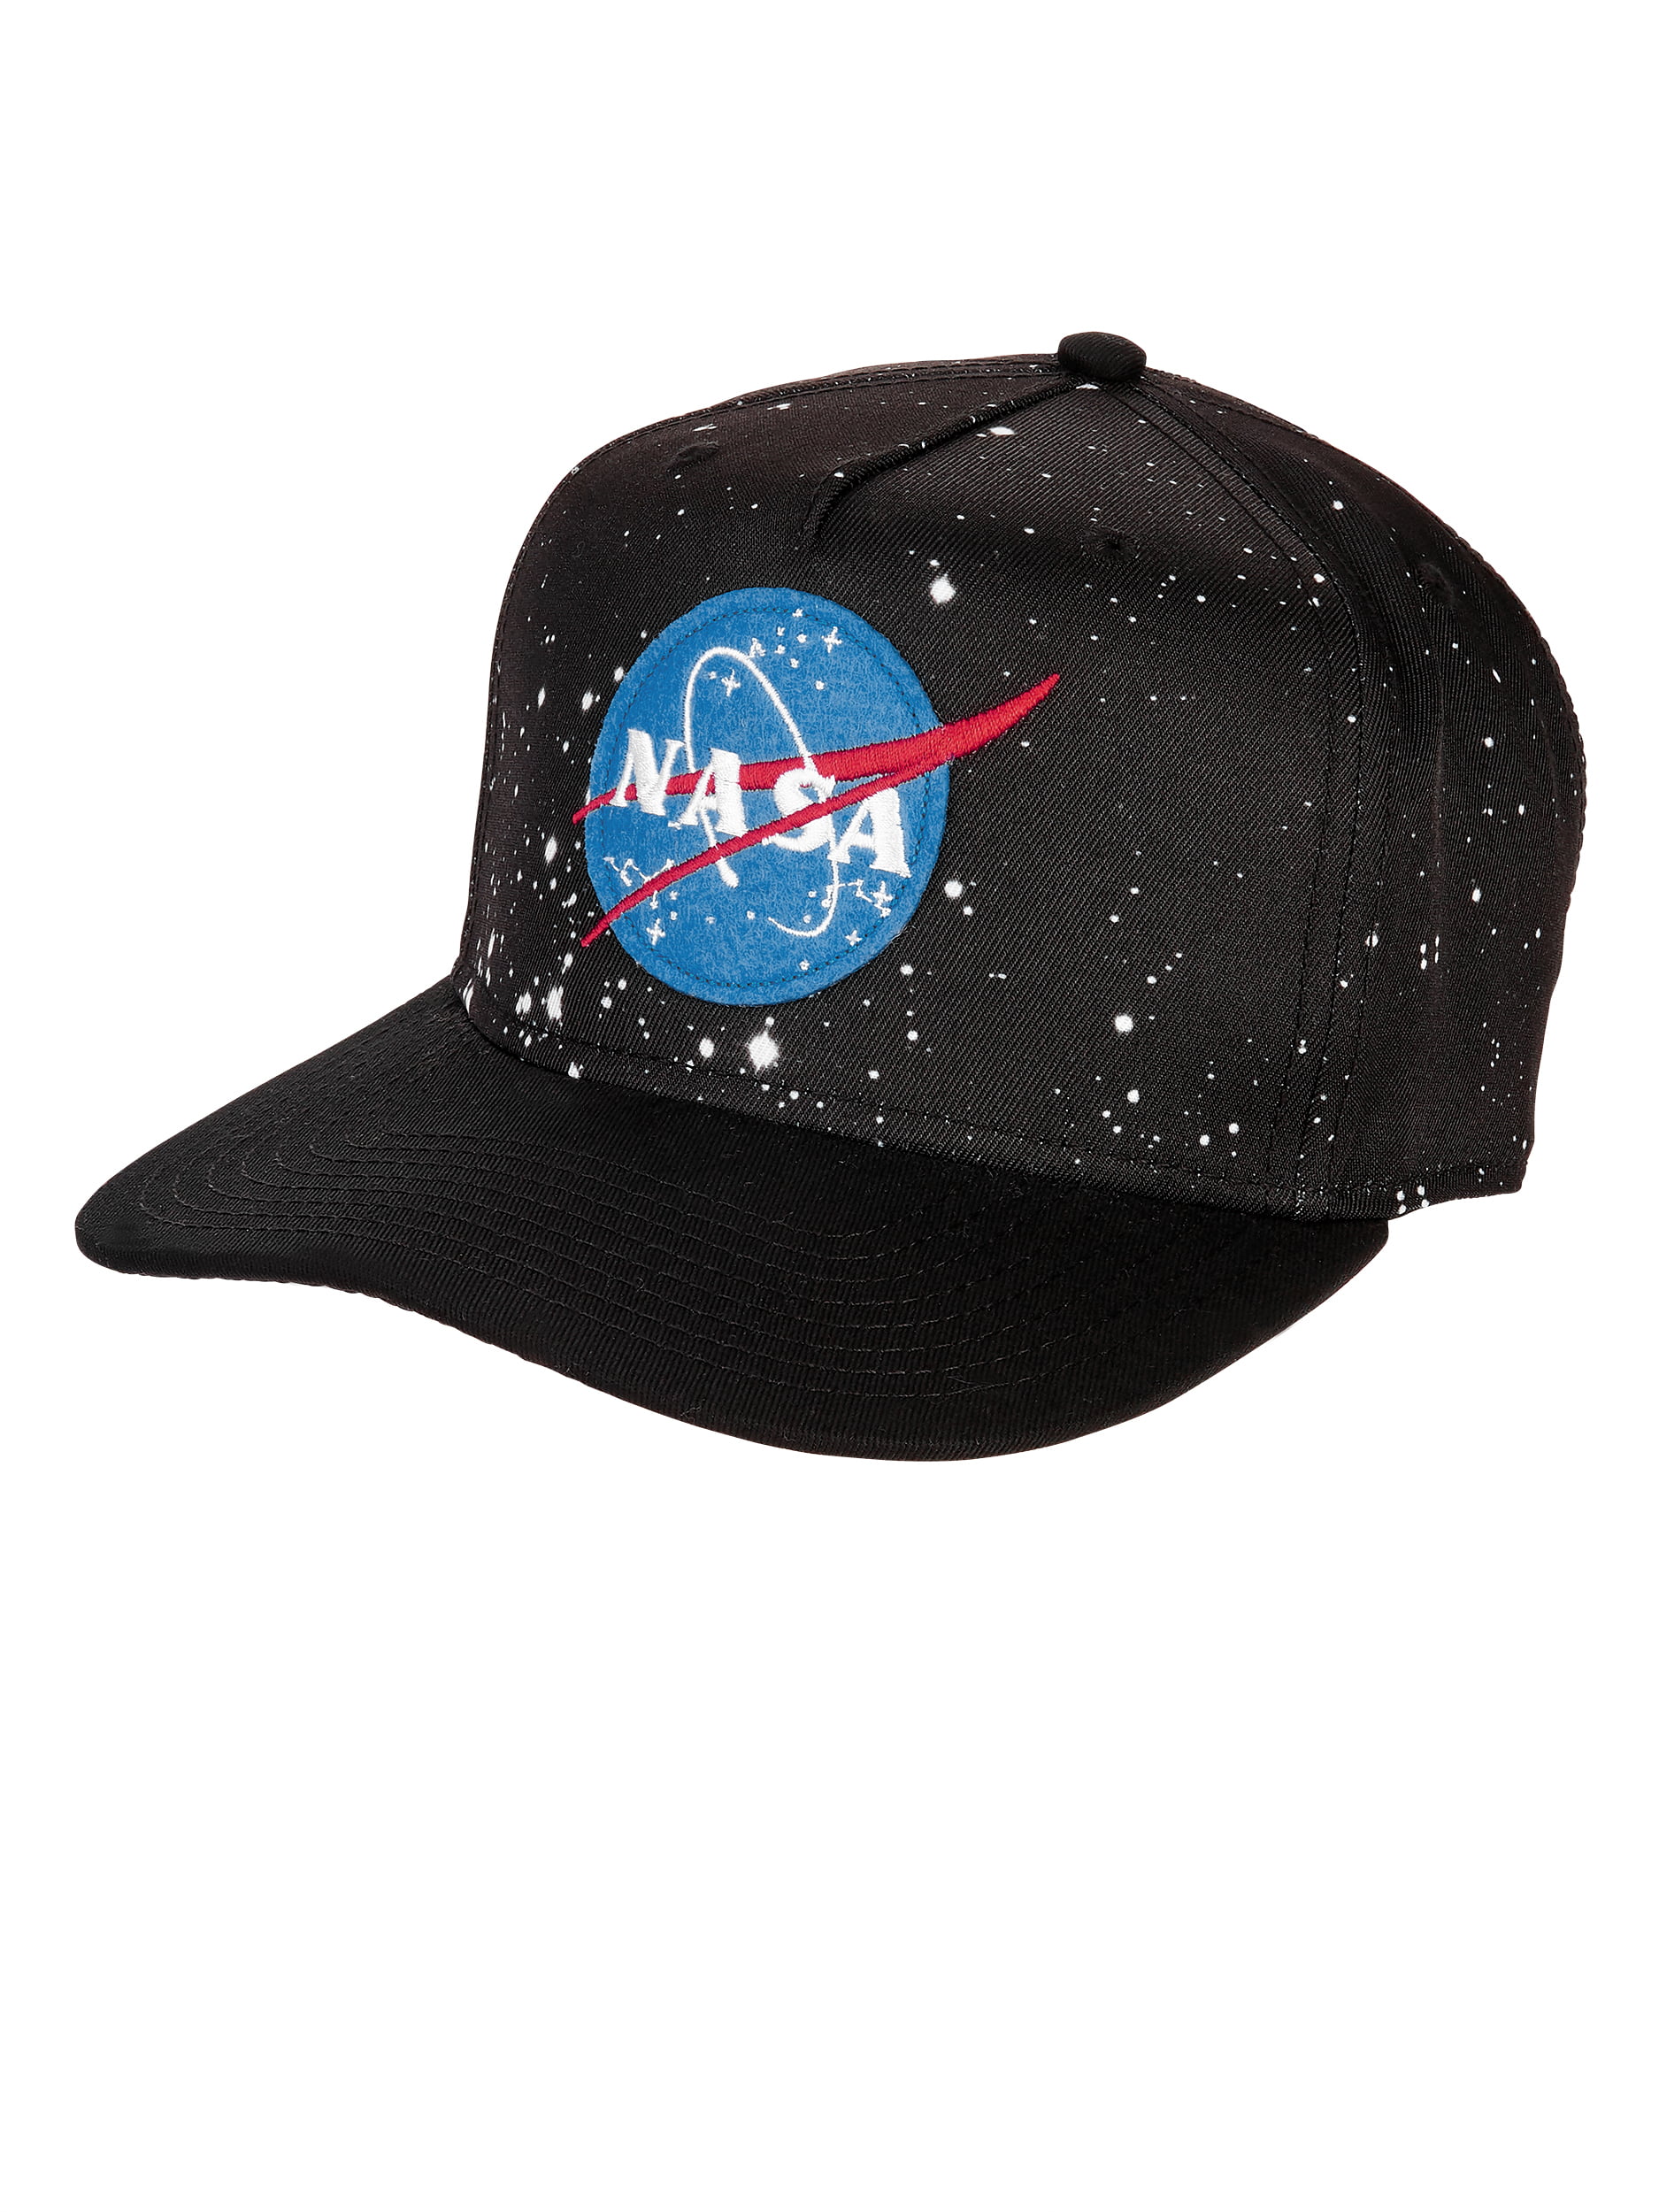 NASA Snapback Cap Hat Black 